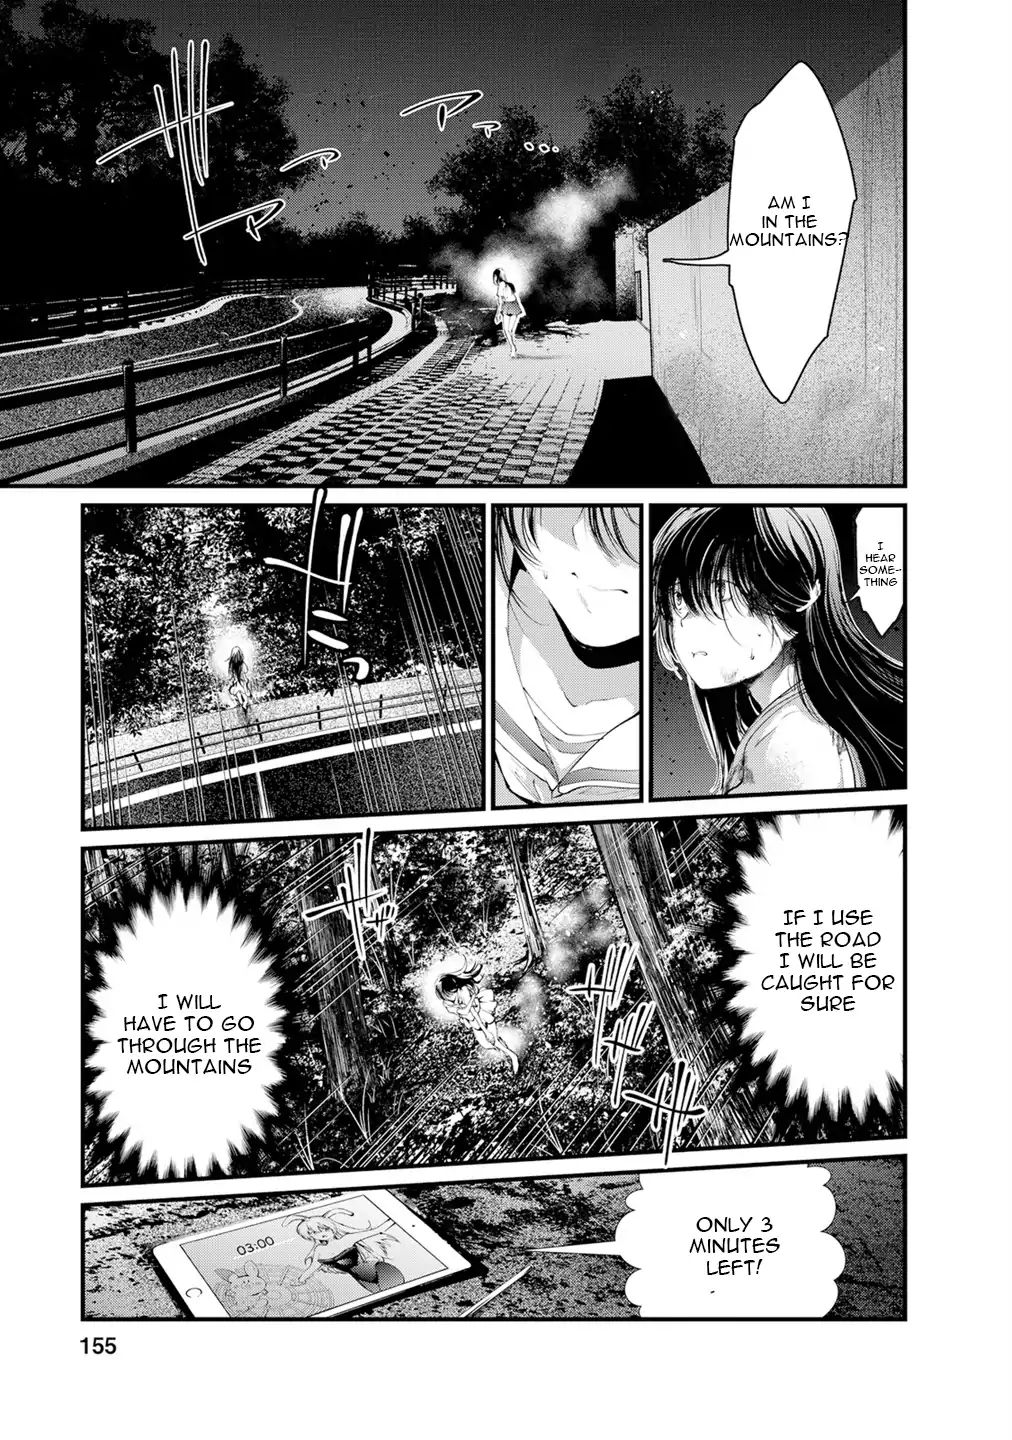 Kangoku Jikken - Page 1